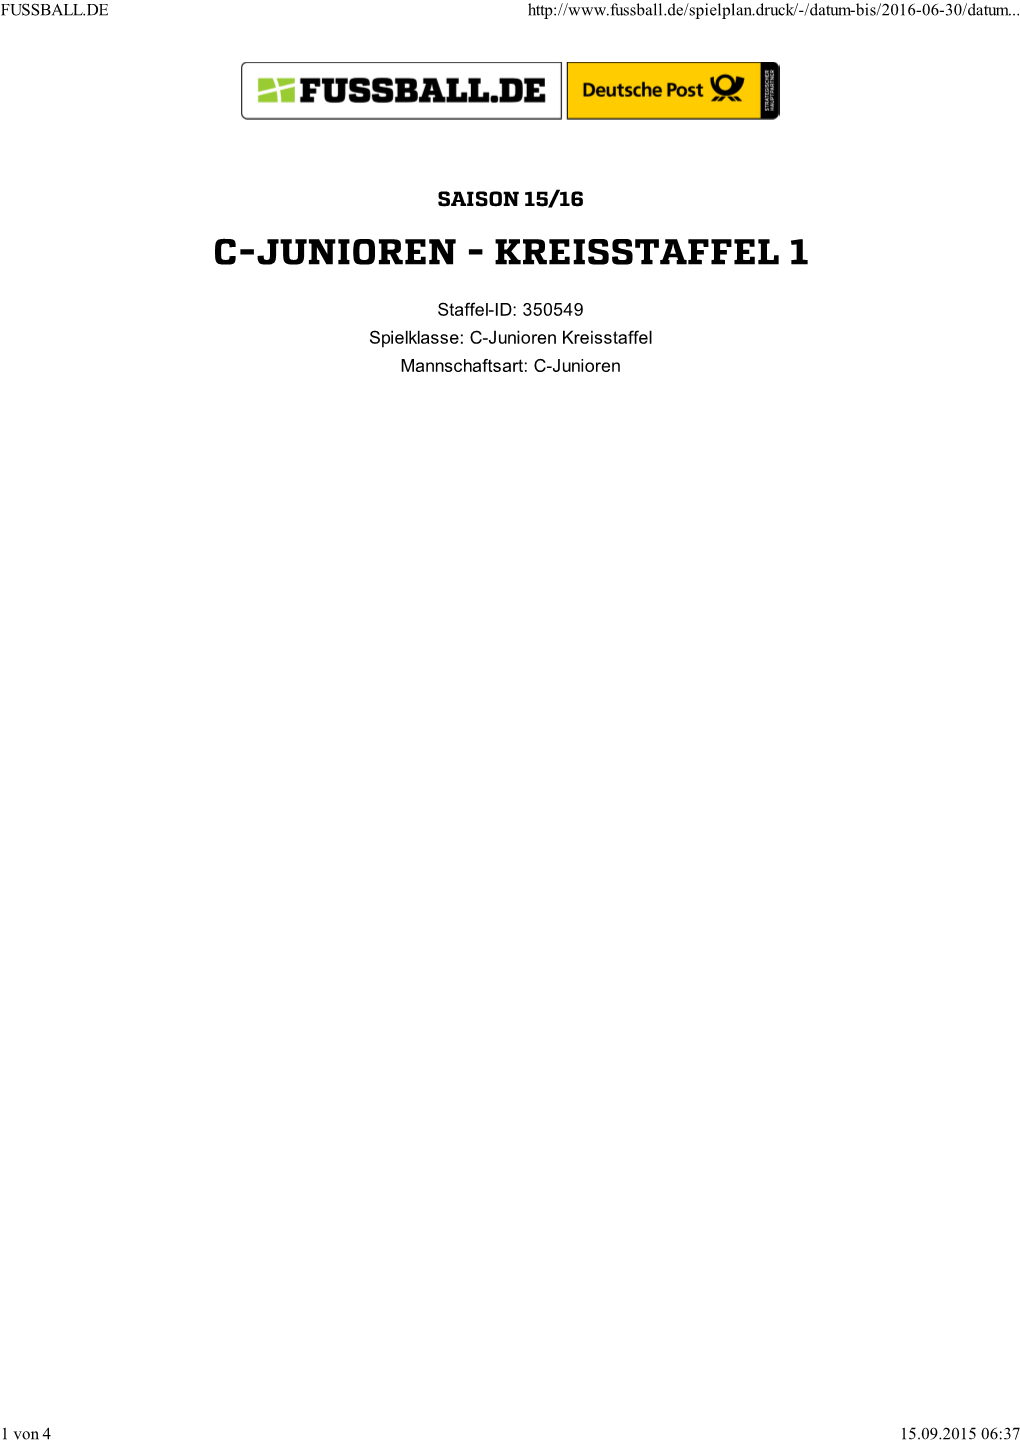 C-Junioren - Kreisstaffel 1